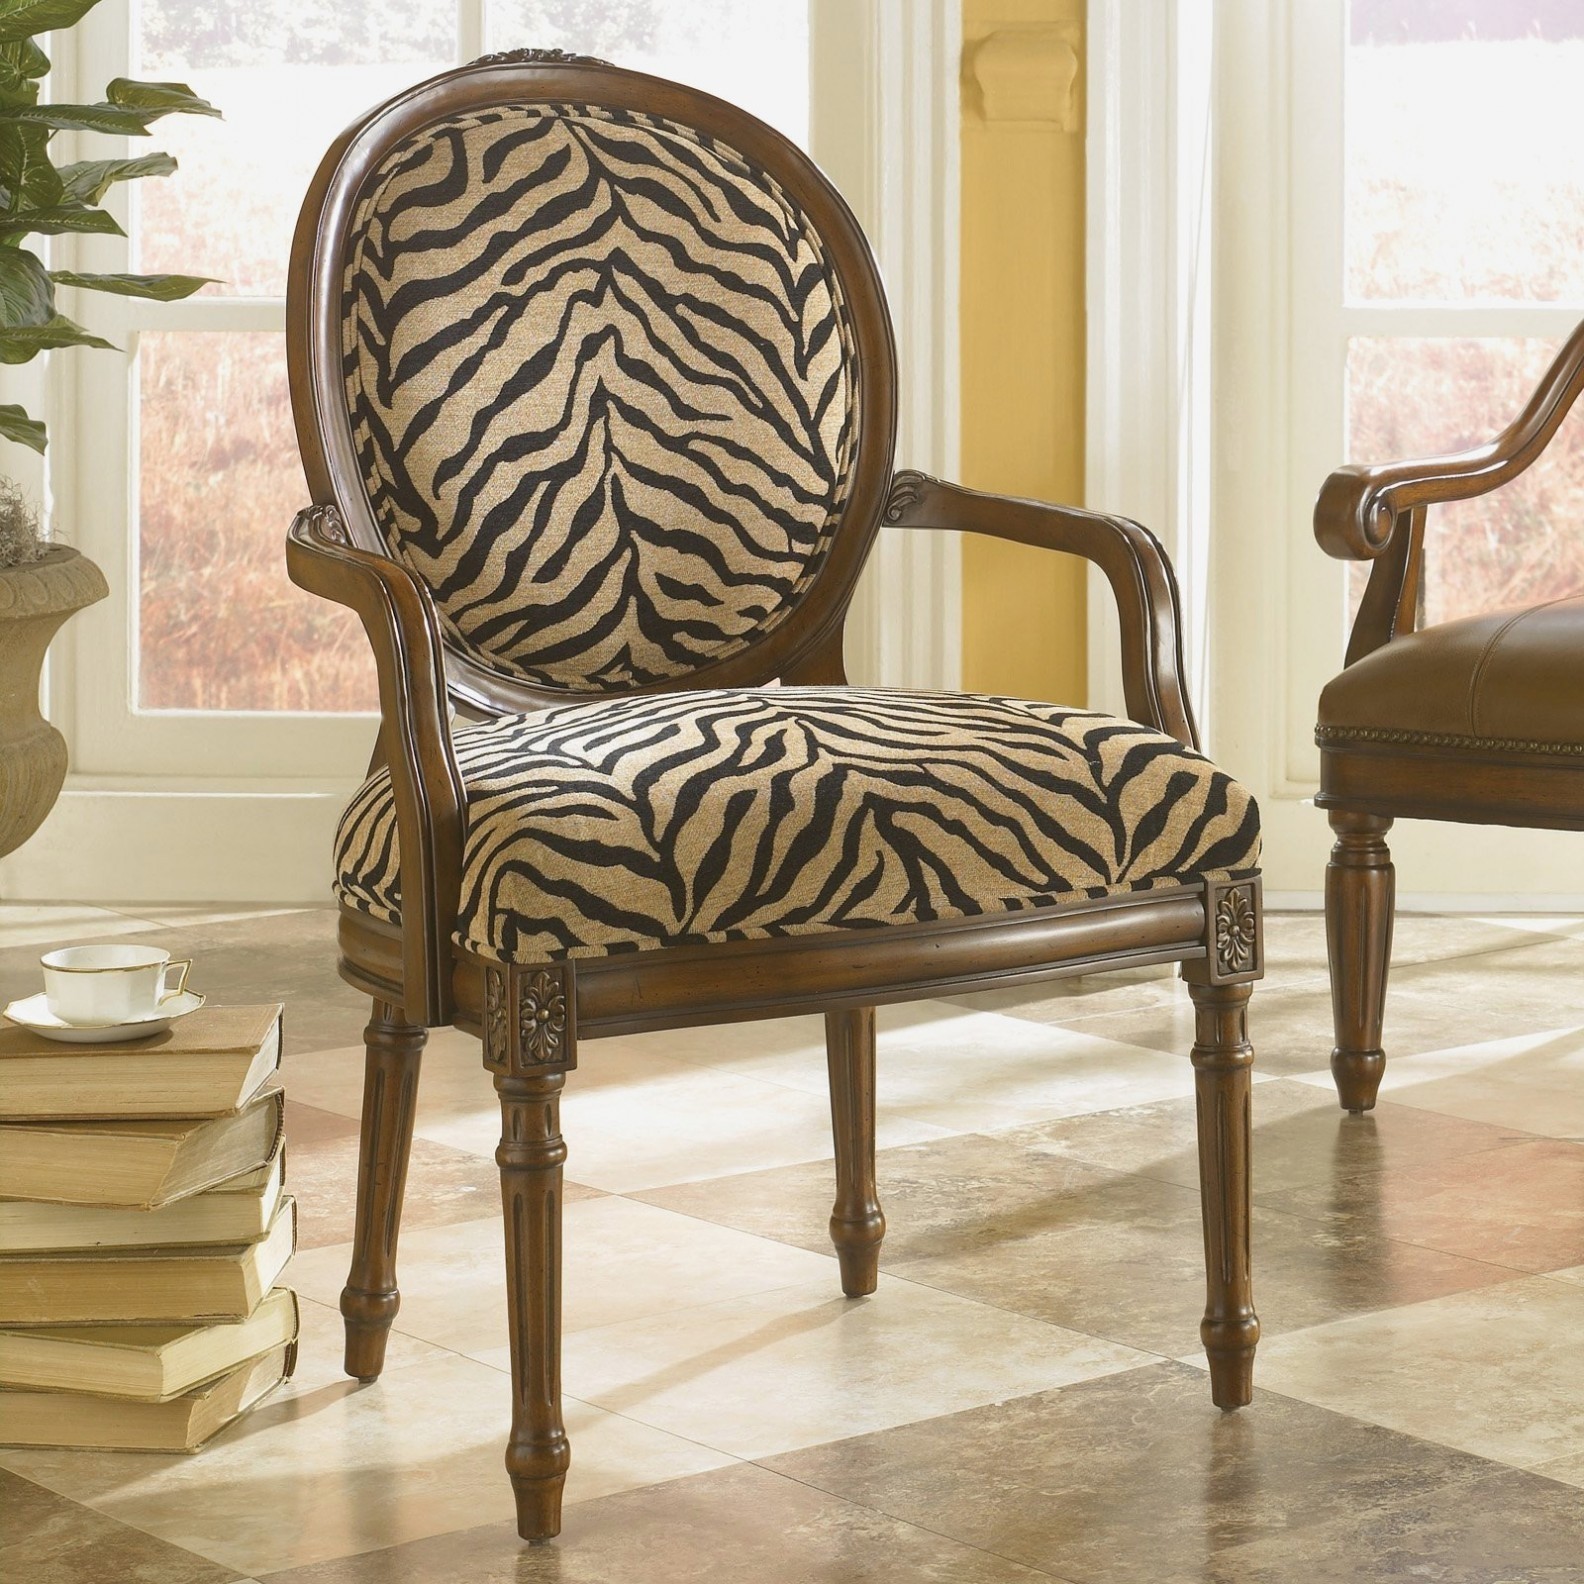 Zebra print dining chairs